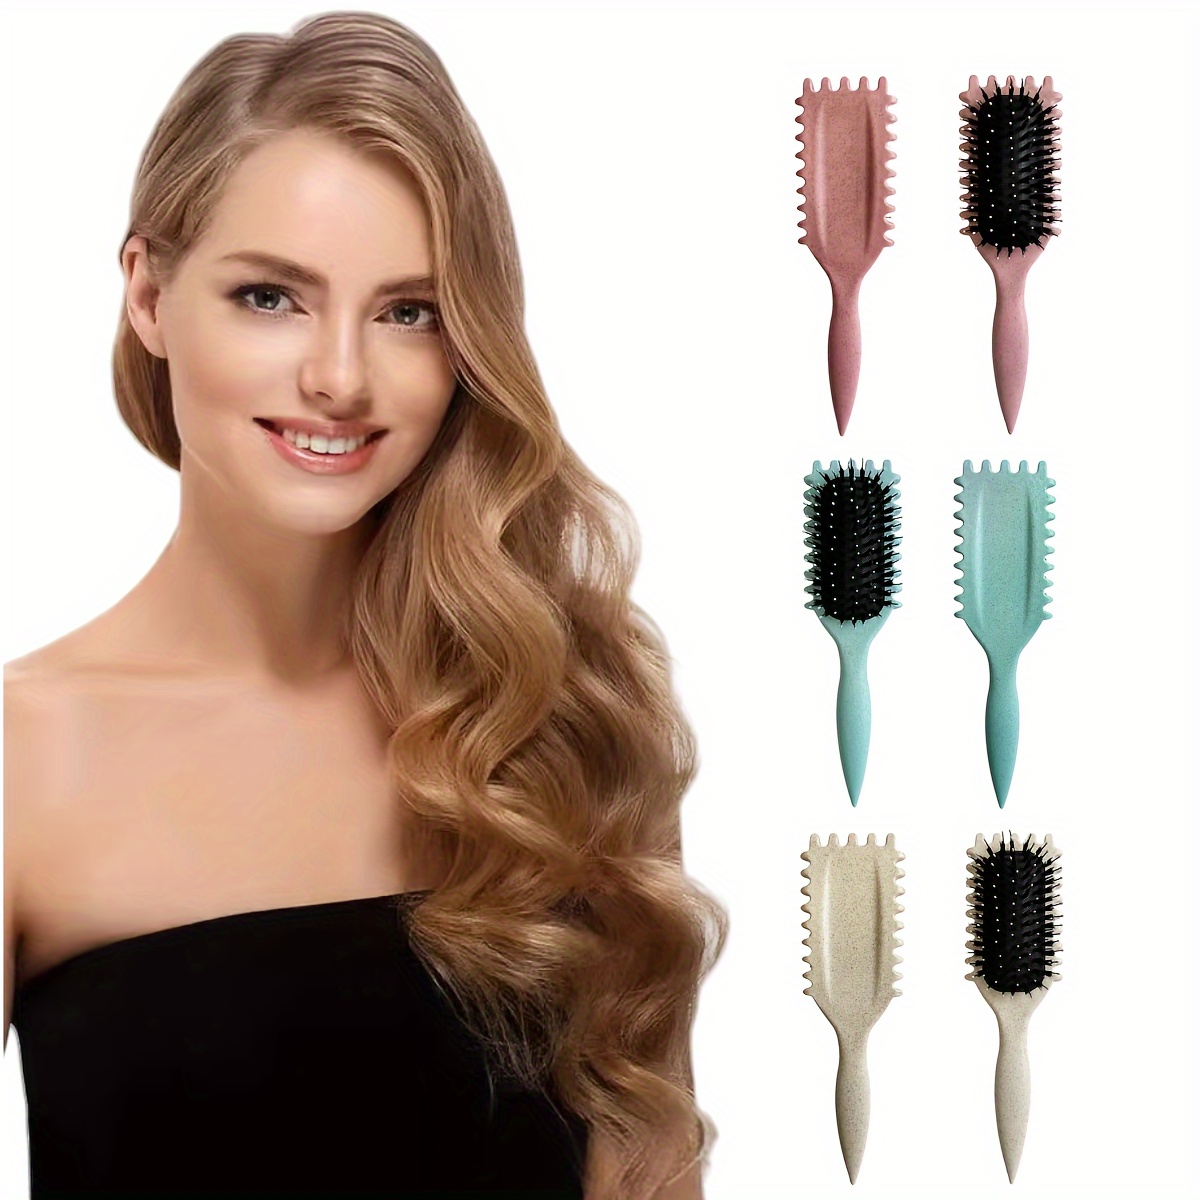 

1pc Anti-static Nylon Bristle Hair Brush For Women - Gentle Detangling & Styling Comb For All Hair Types